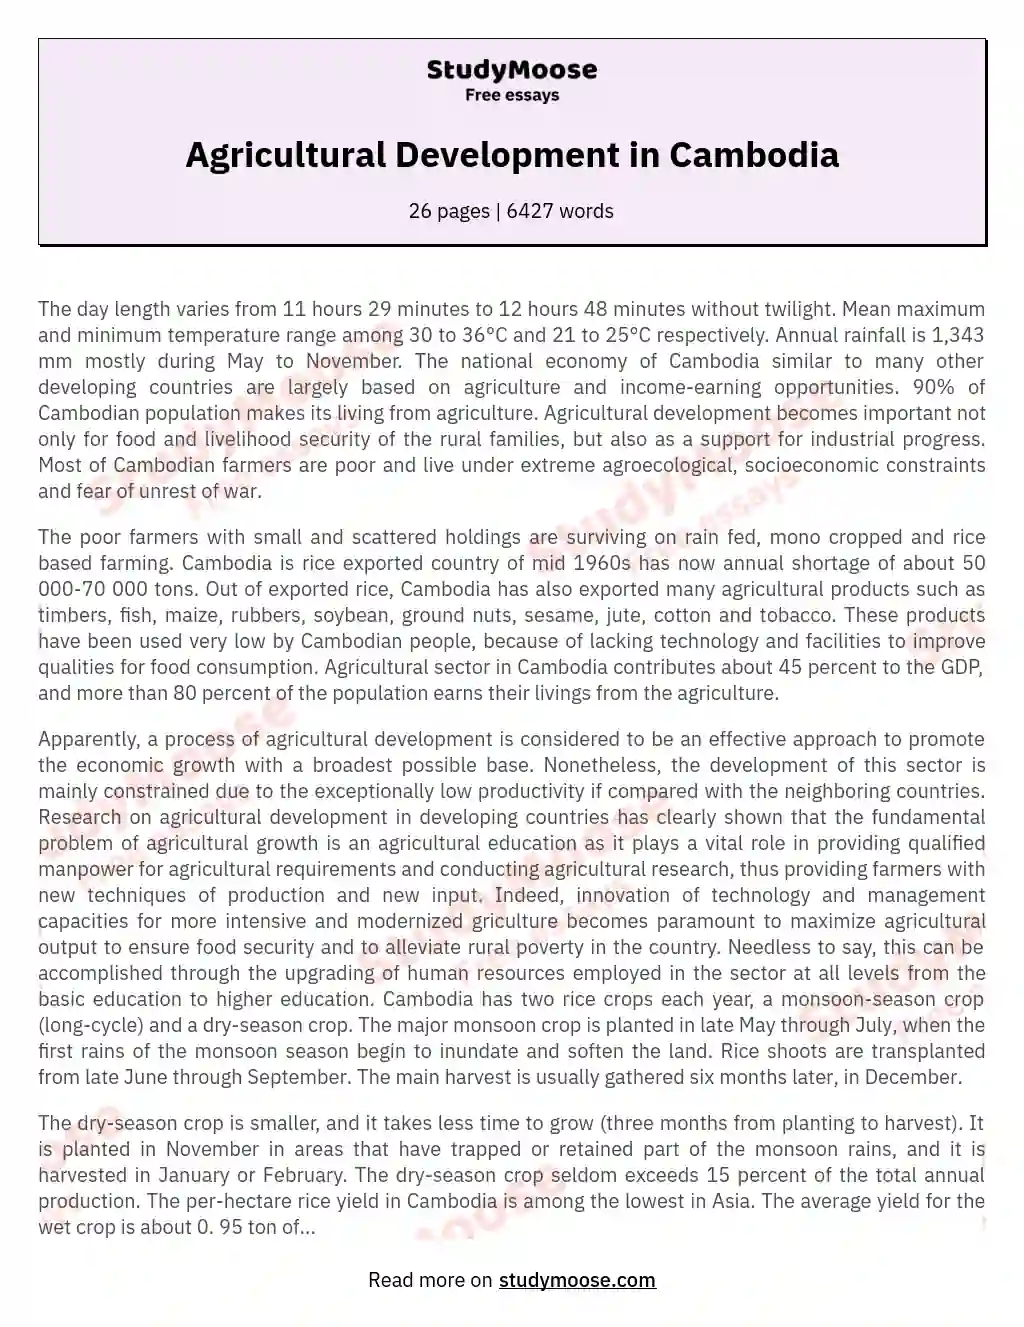 Agricultural Development in Cambodia essay